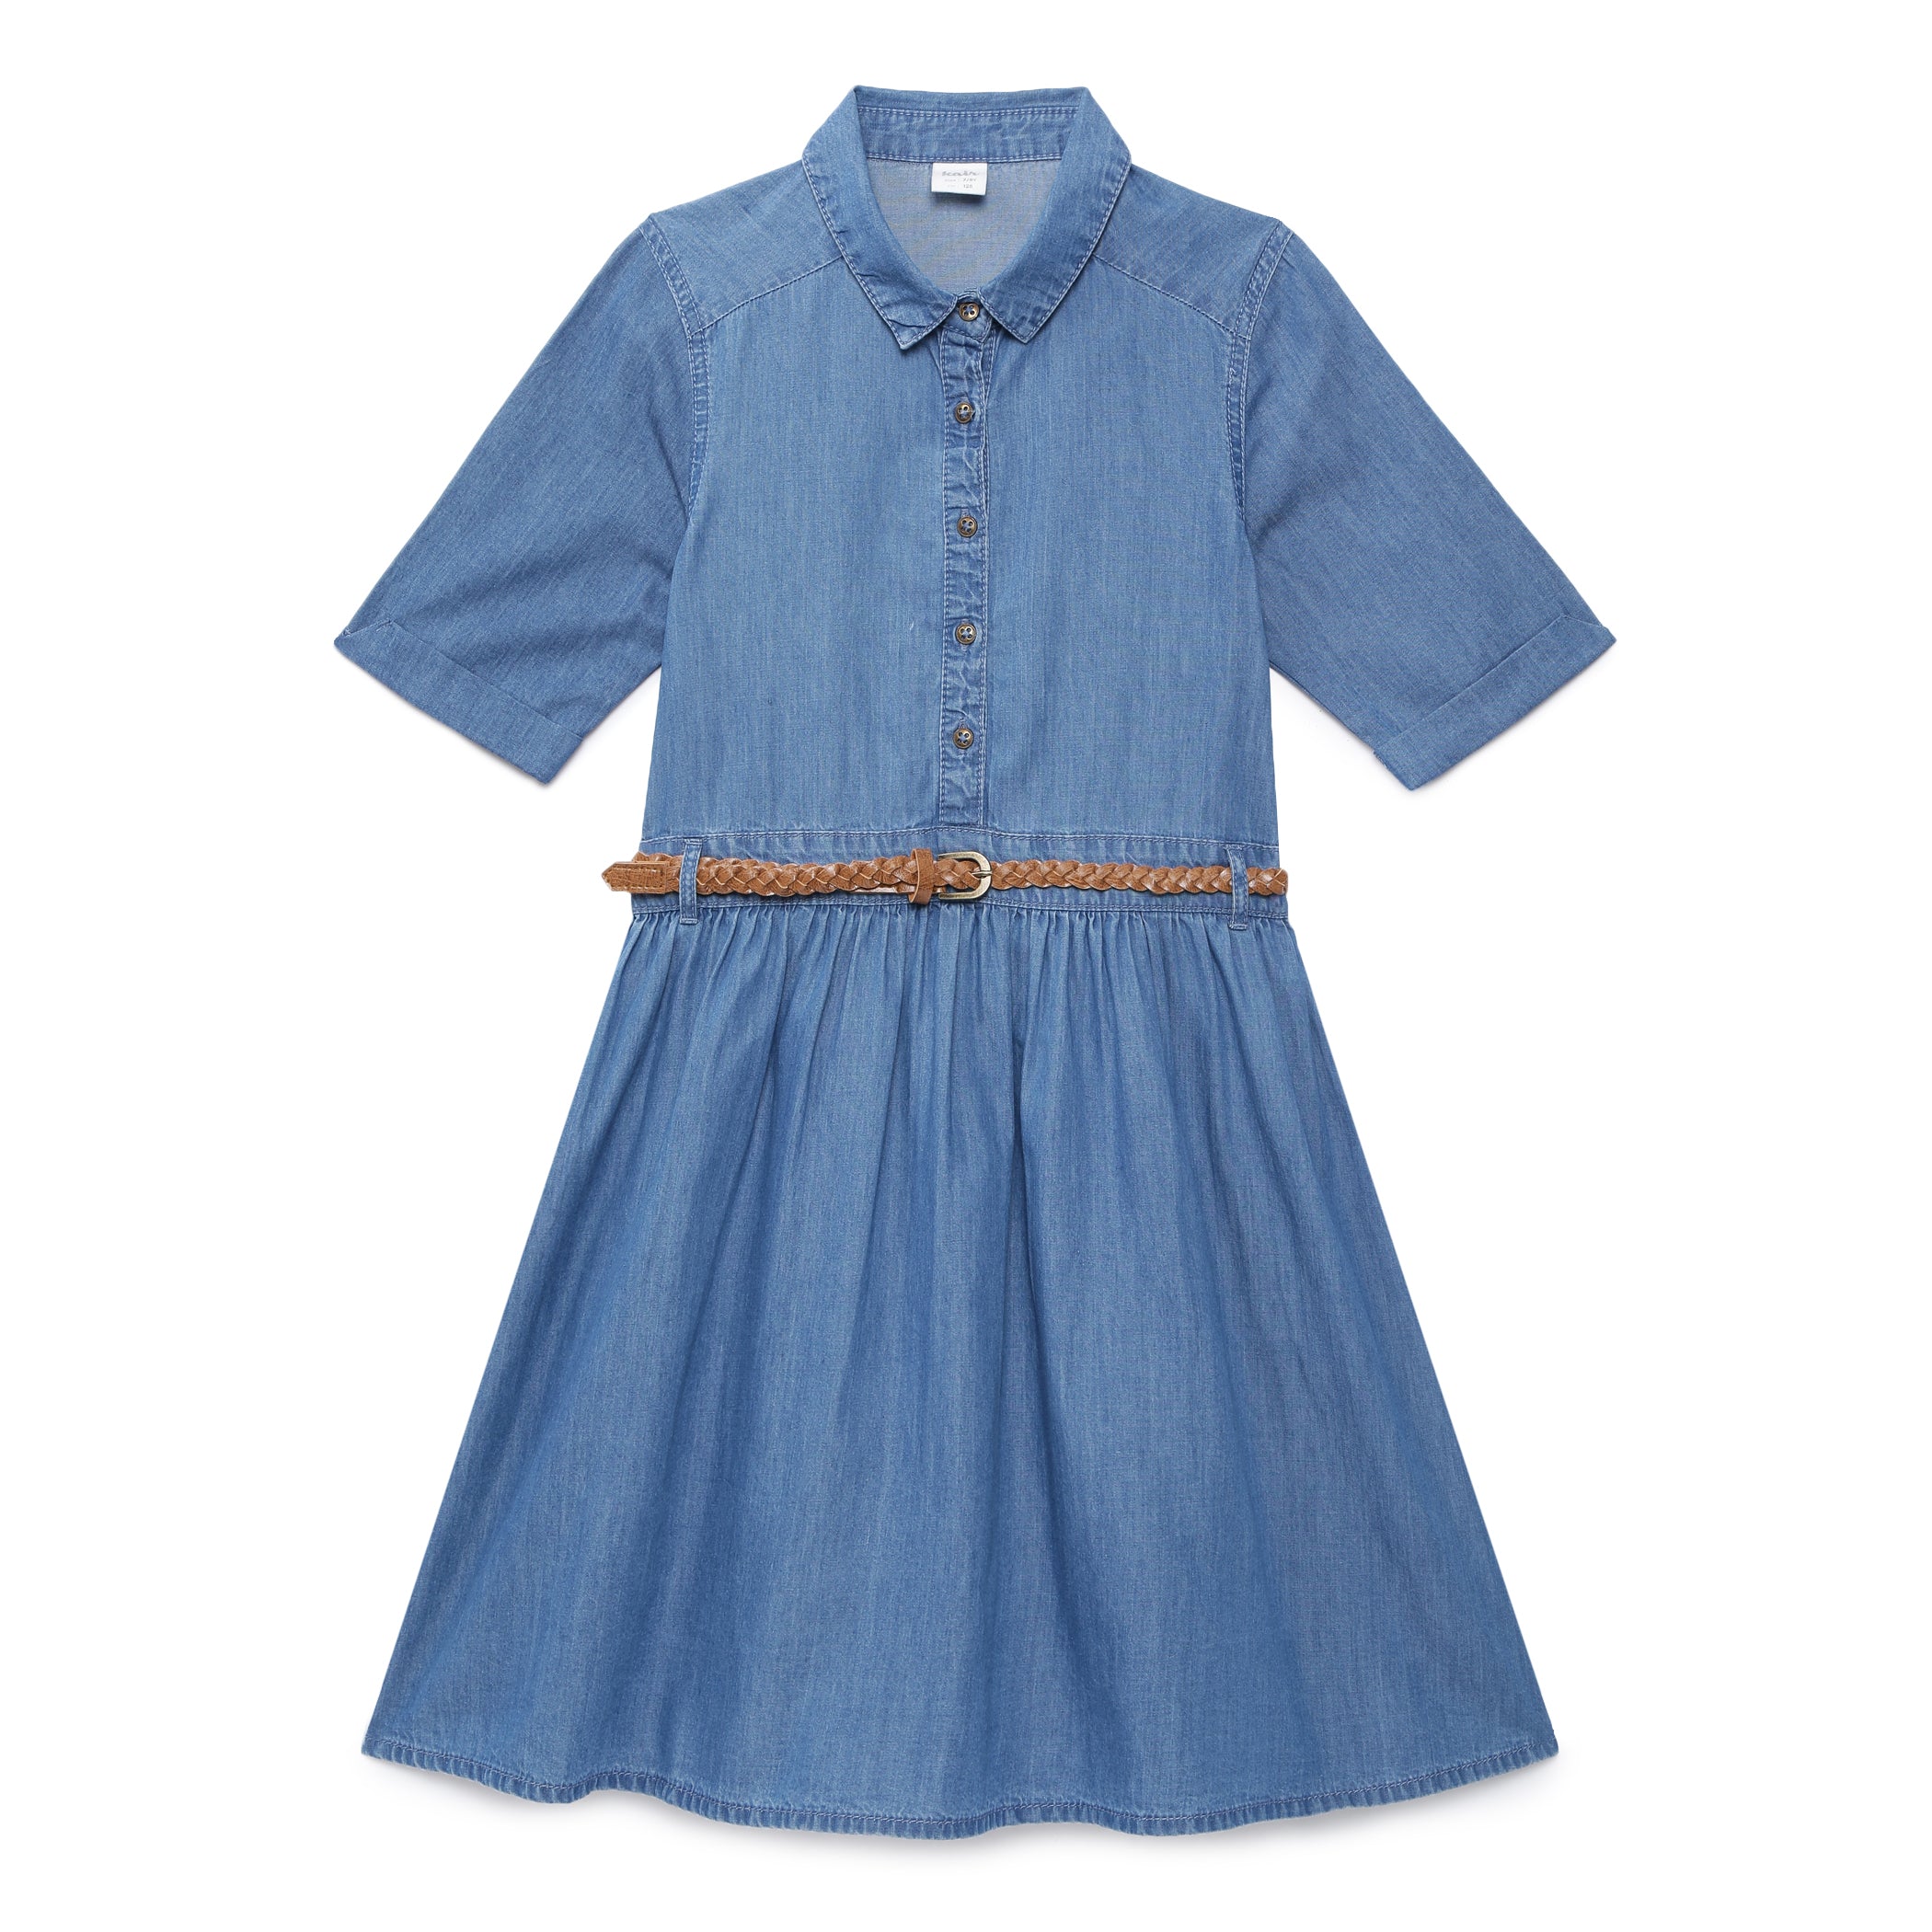 St Bernard Dunnes Stores Baby Girls Embroidered Denim Dress Size 3-6 Months  | eBay